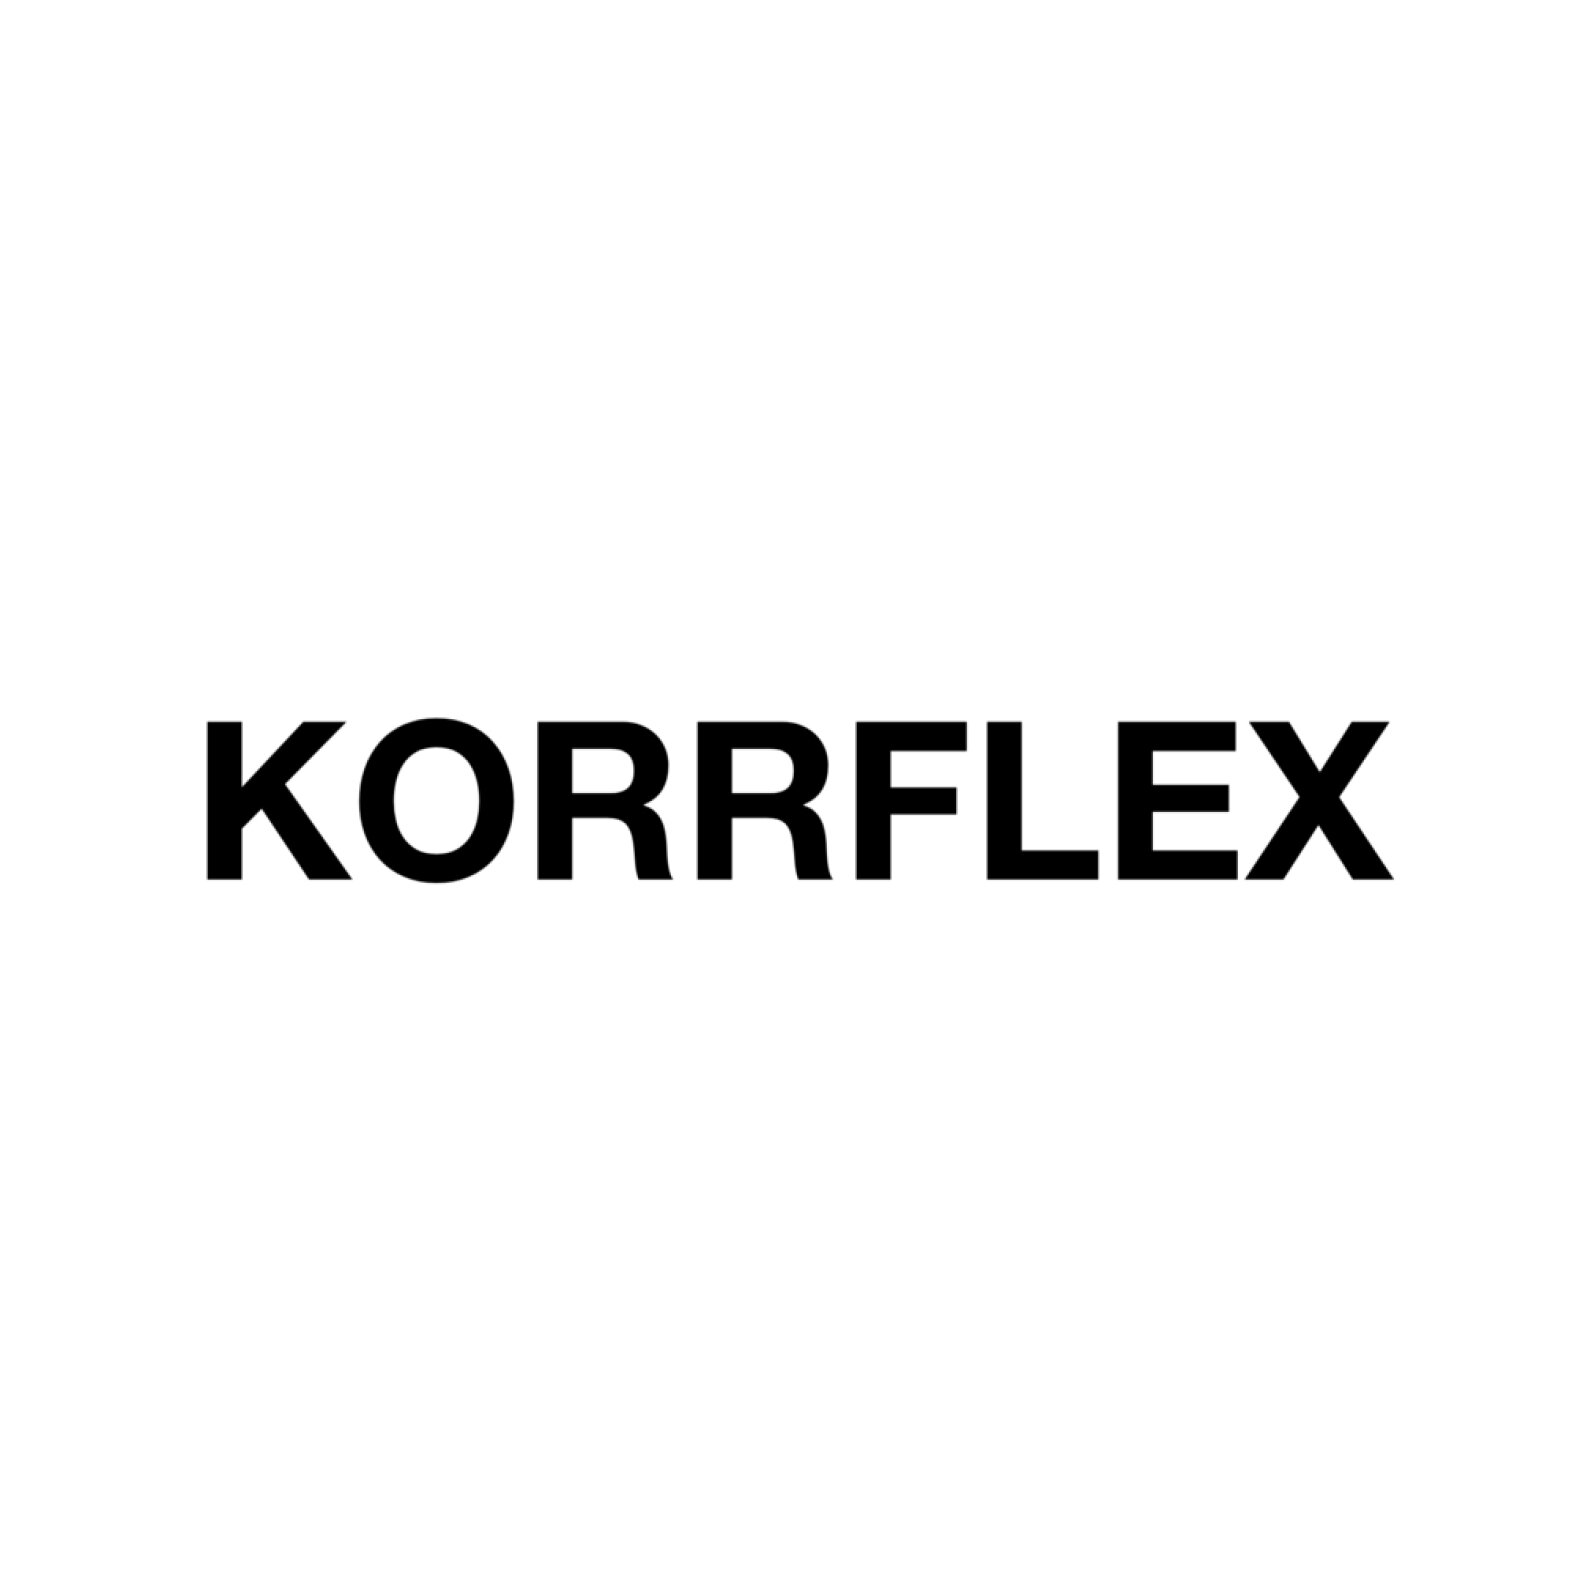 Jessica Abraham Korrflex Logo.jpg